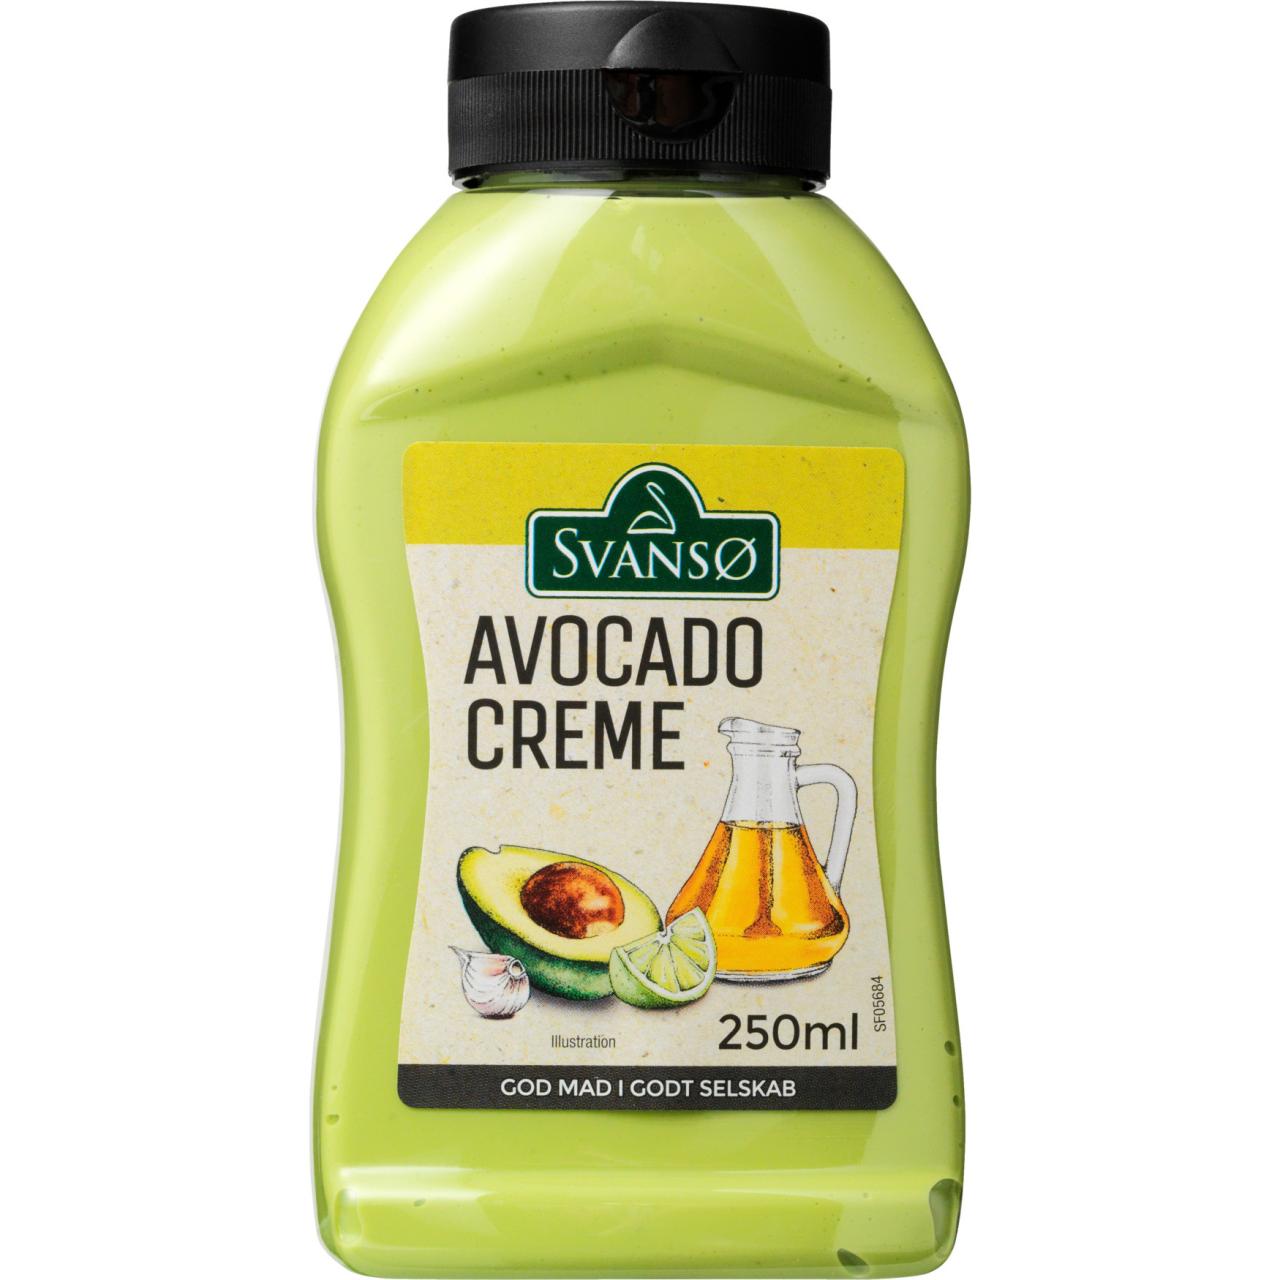 Svansø Avocado Creme 230g